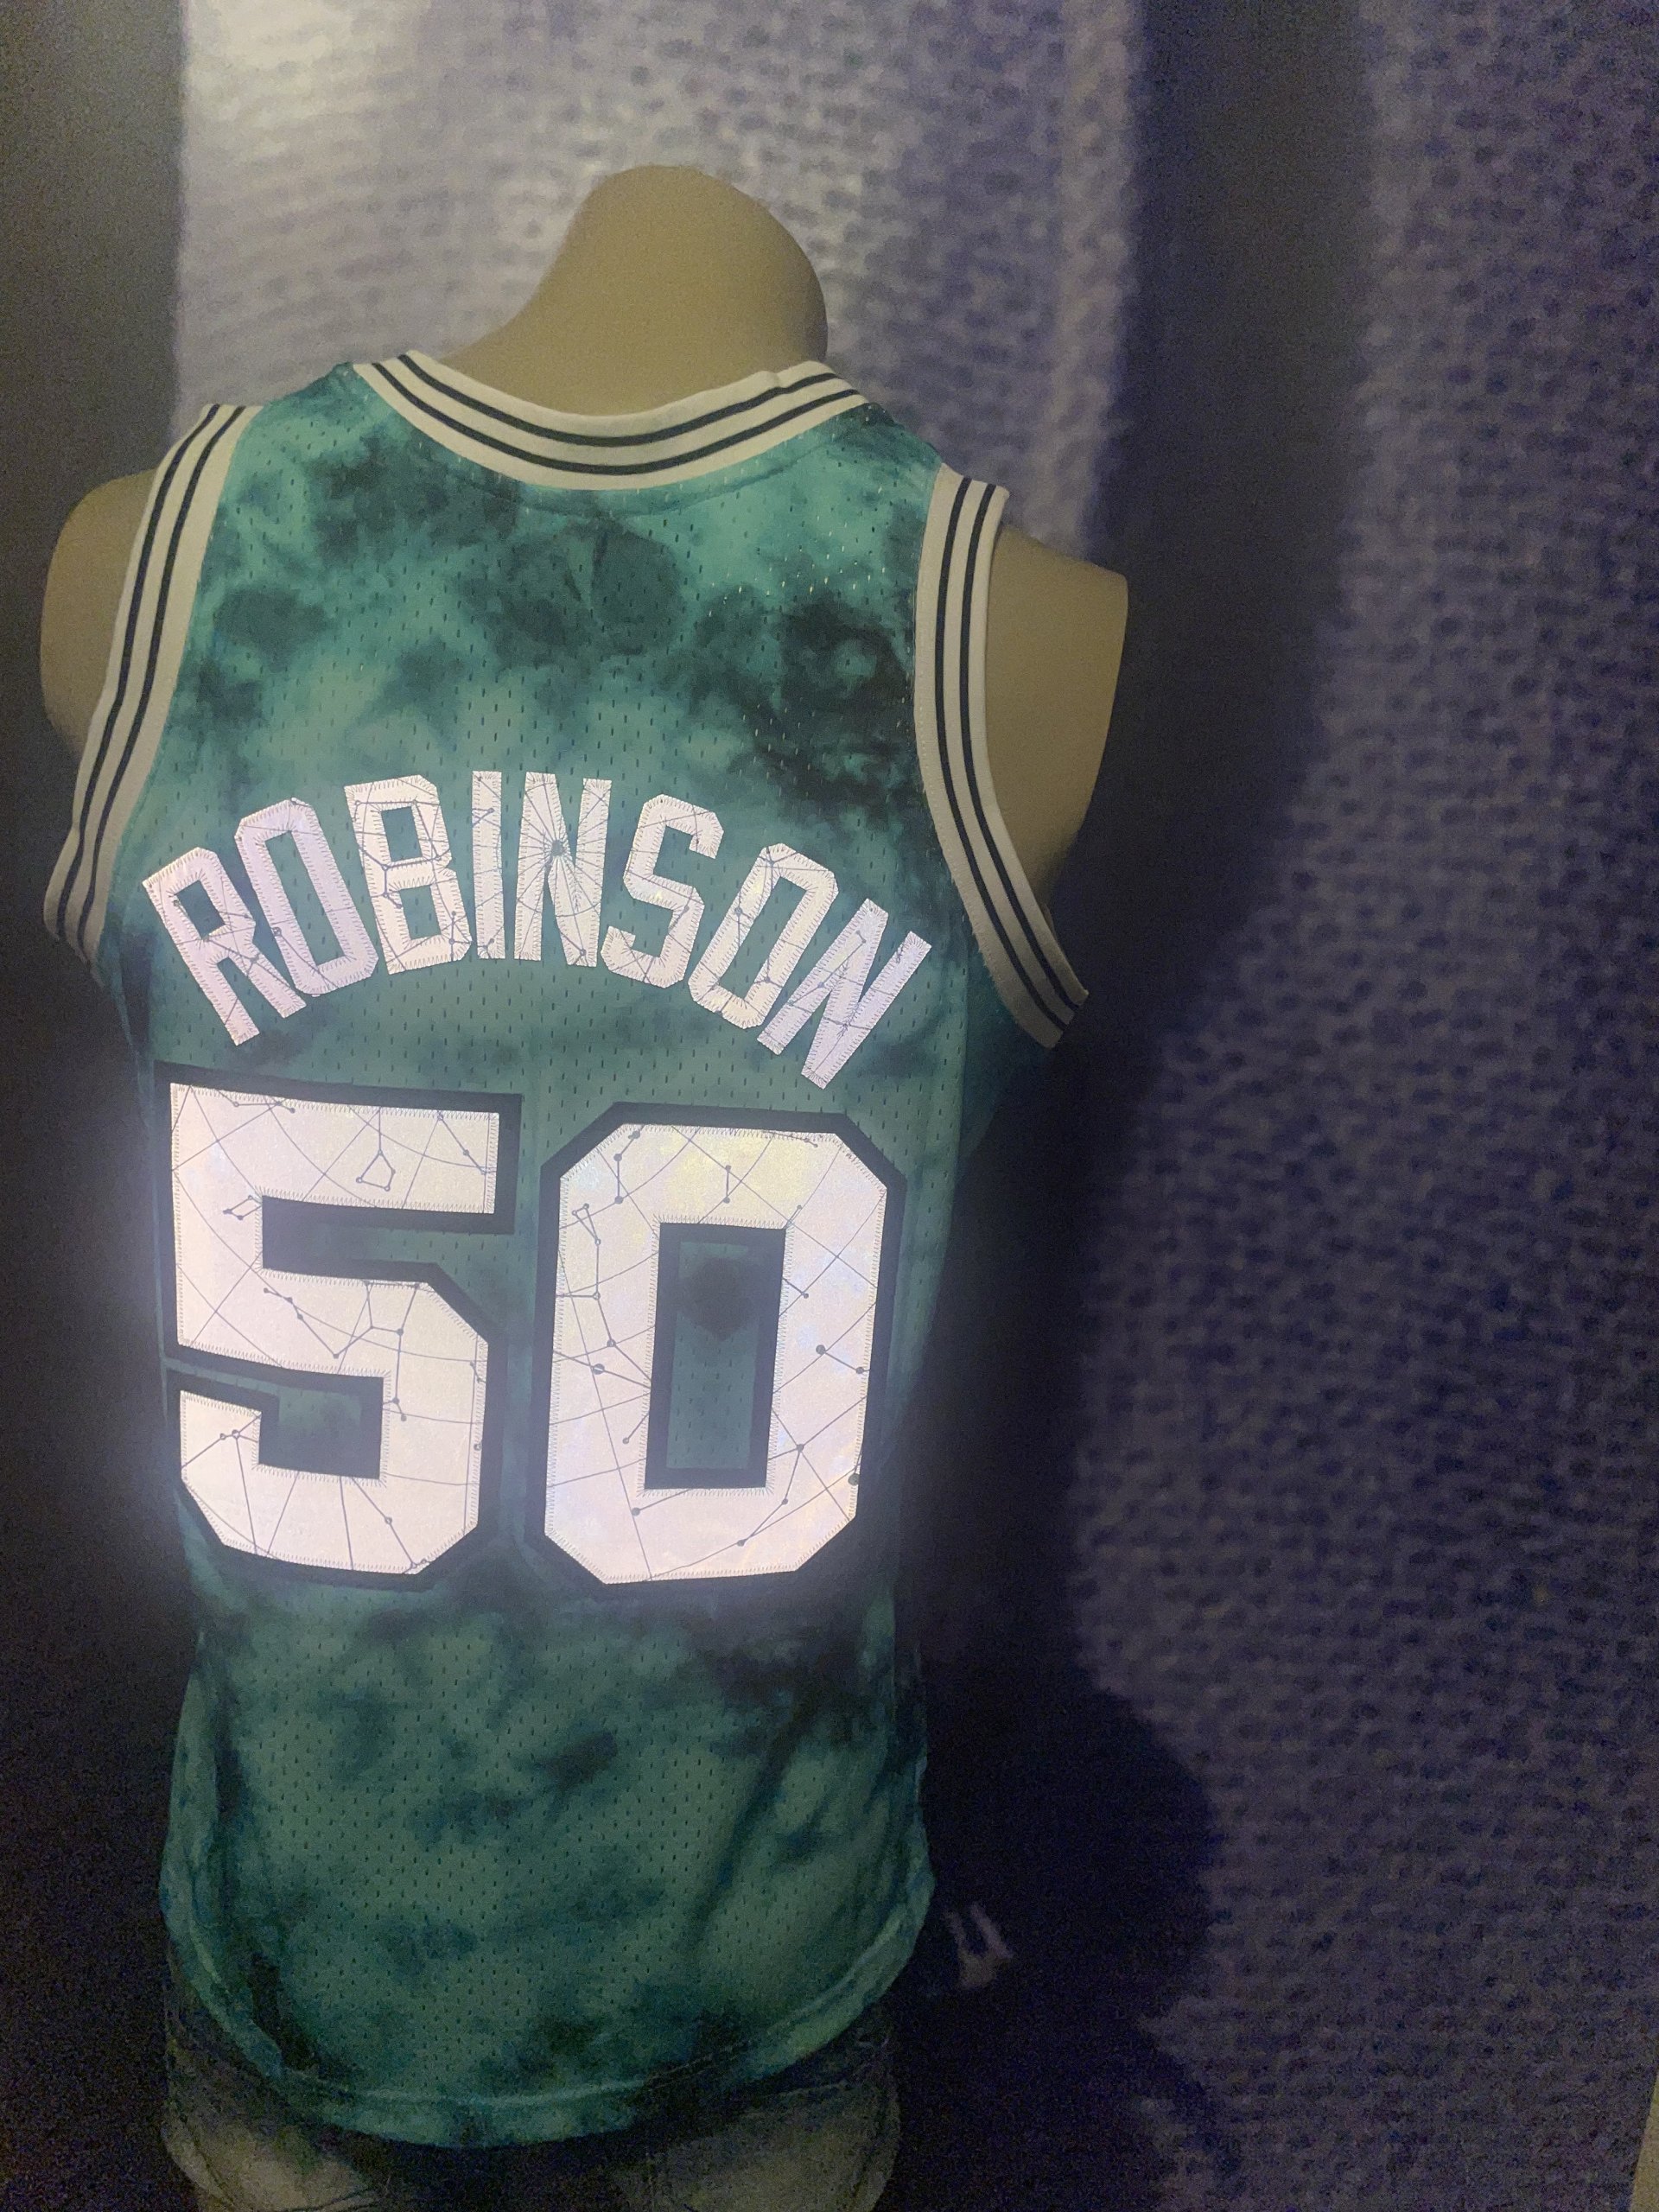 David Robinson 50 San Antonio Spurs 1998-99 Mitchell and Ness Swingman  Jersey